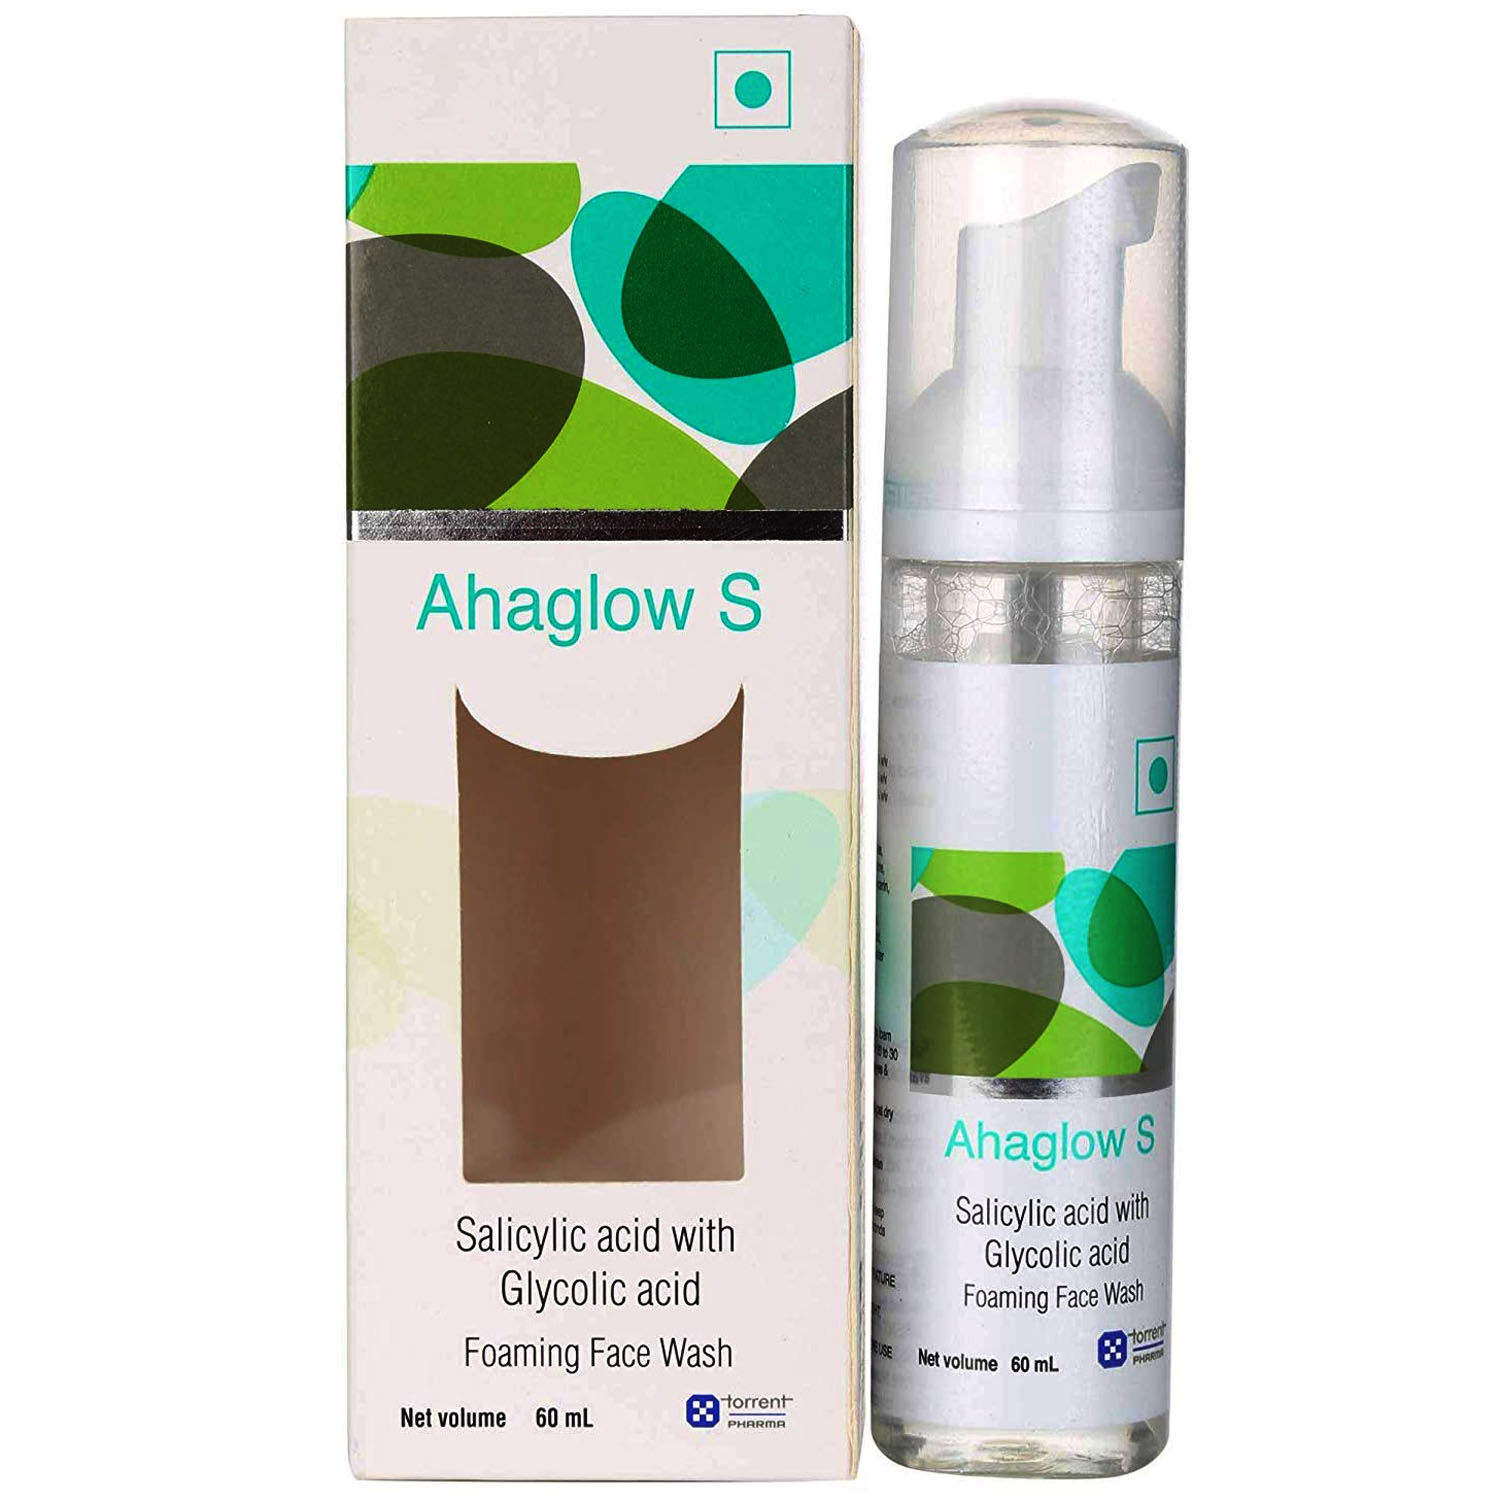 Ahaglow S Foaming Face Wash, 60 ml, Pack of 1 